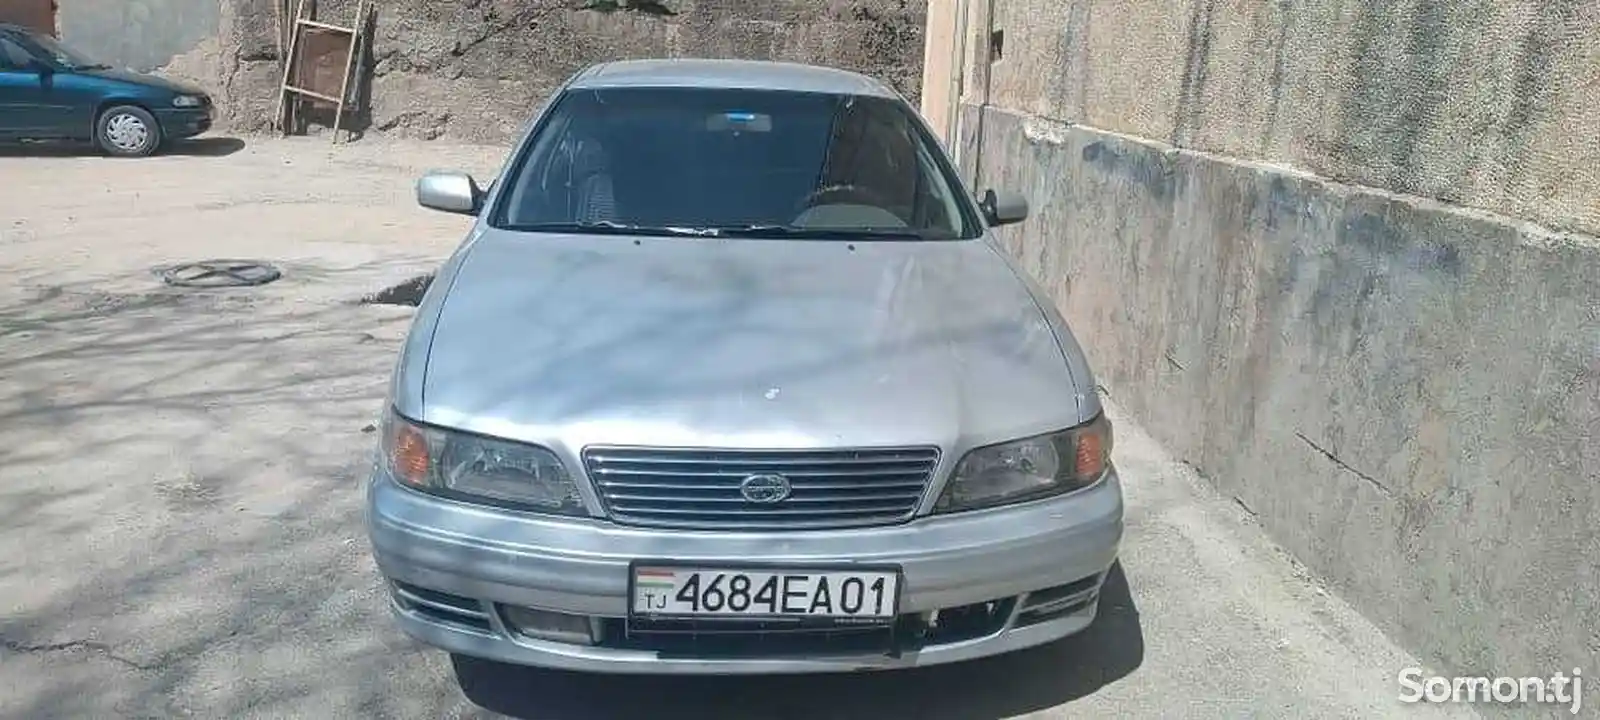 Nissan Cefiro, 1996-1